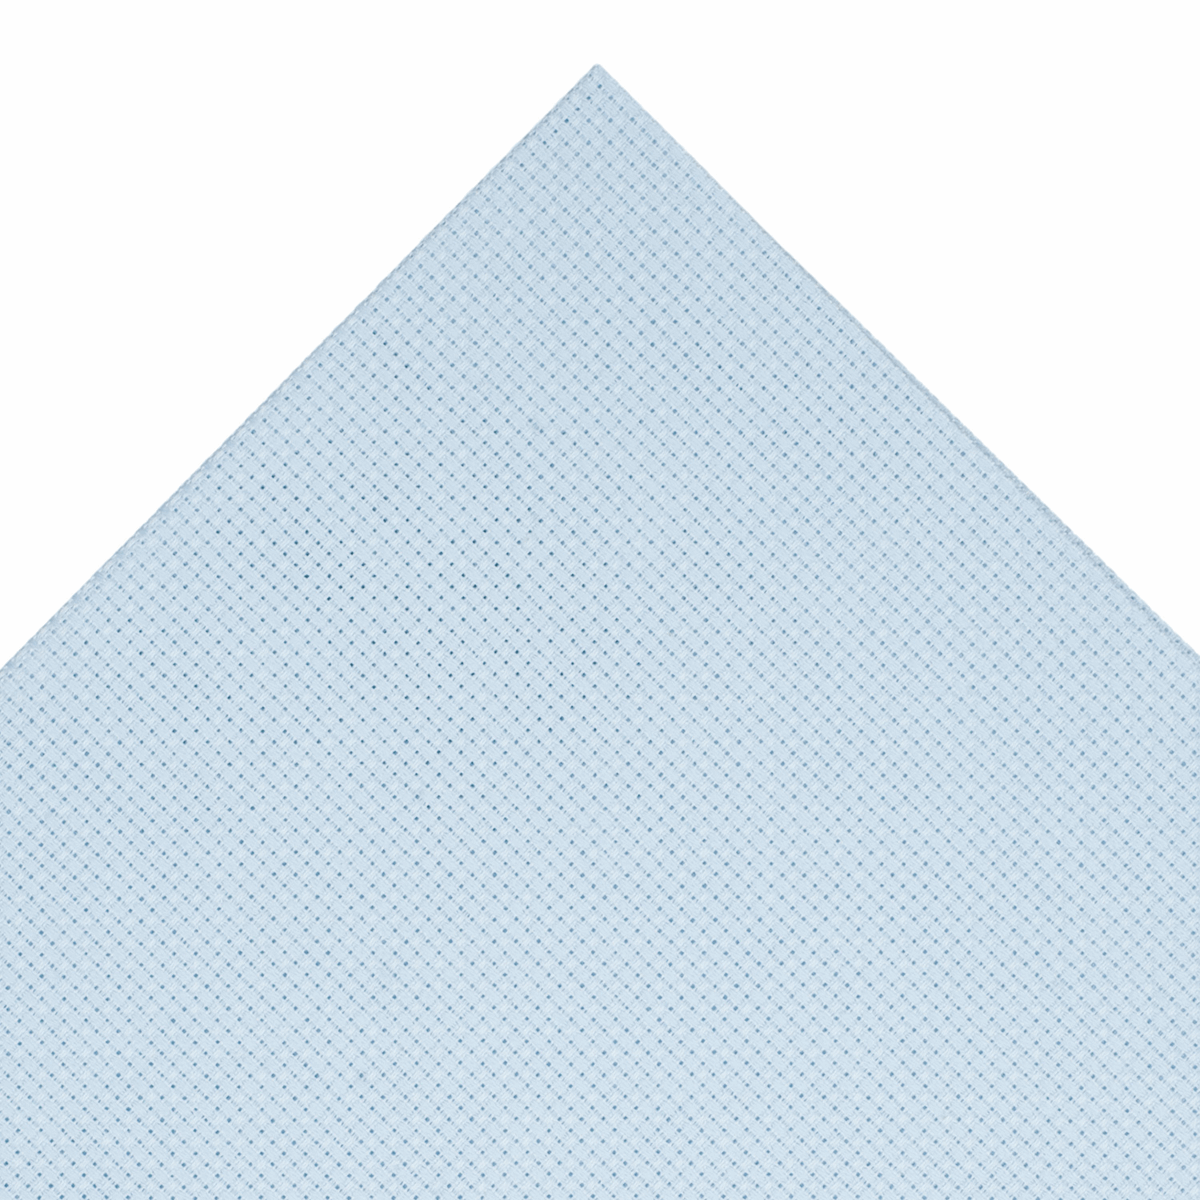 Trimits Pale Blue Needlecraft Fabric - Aida 14 Count 45 x 30cm